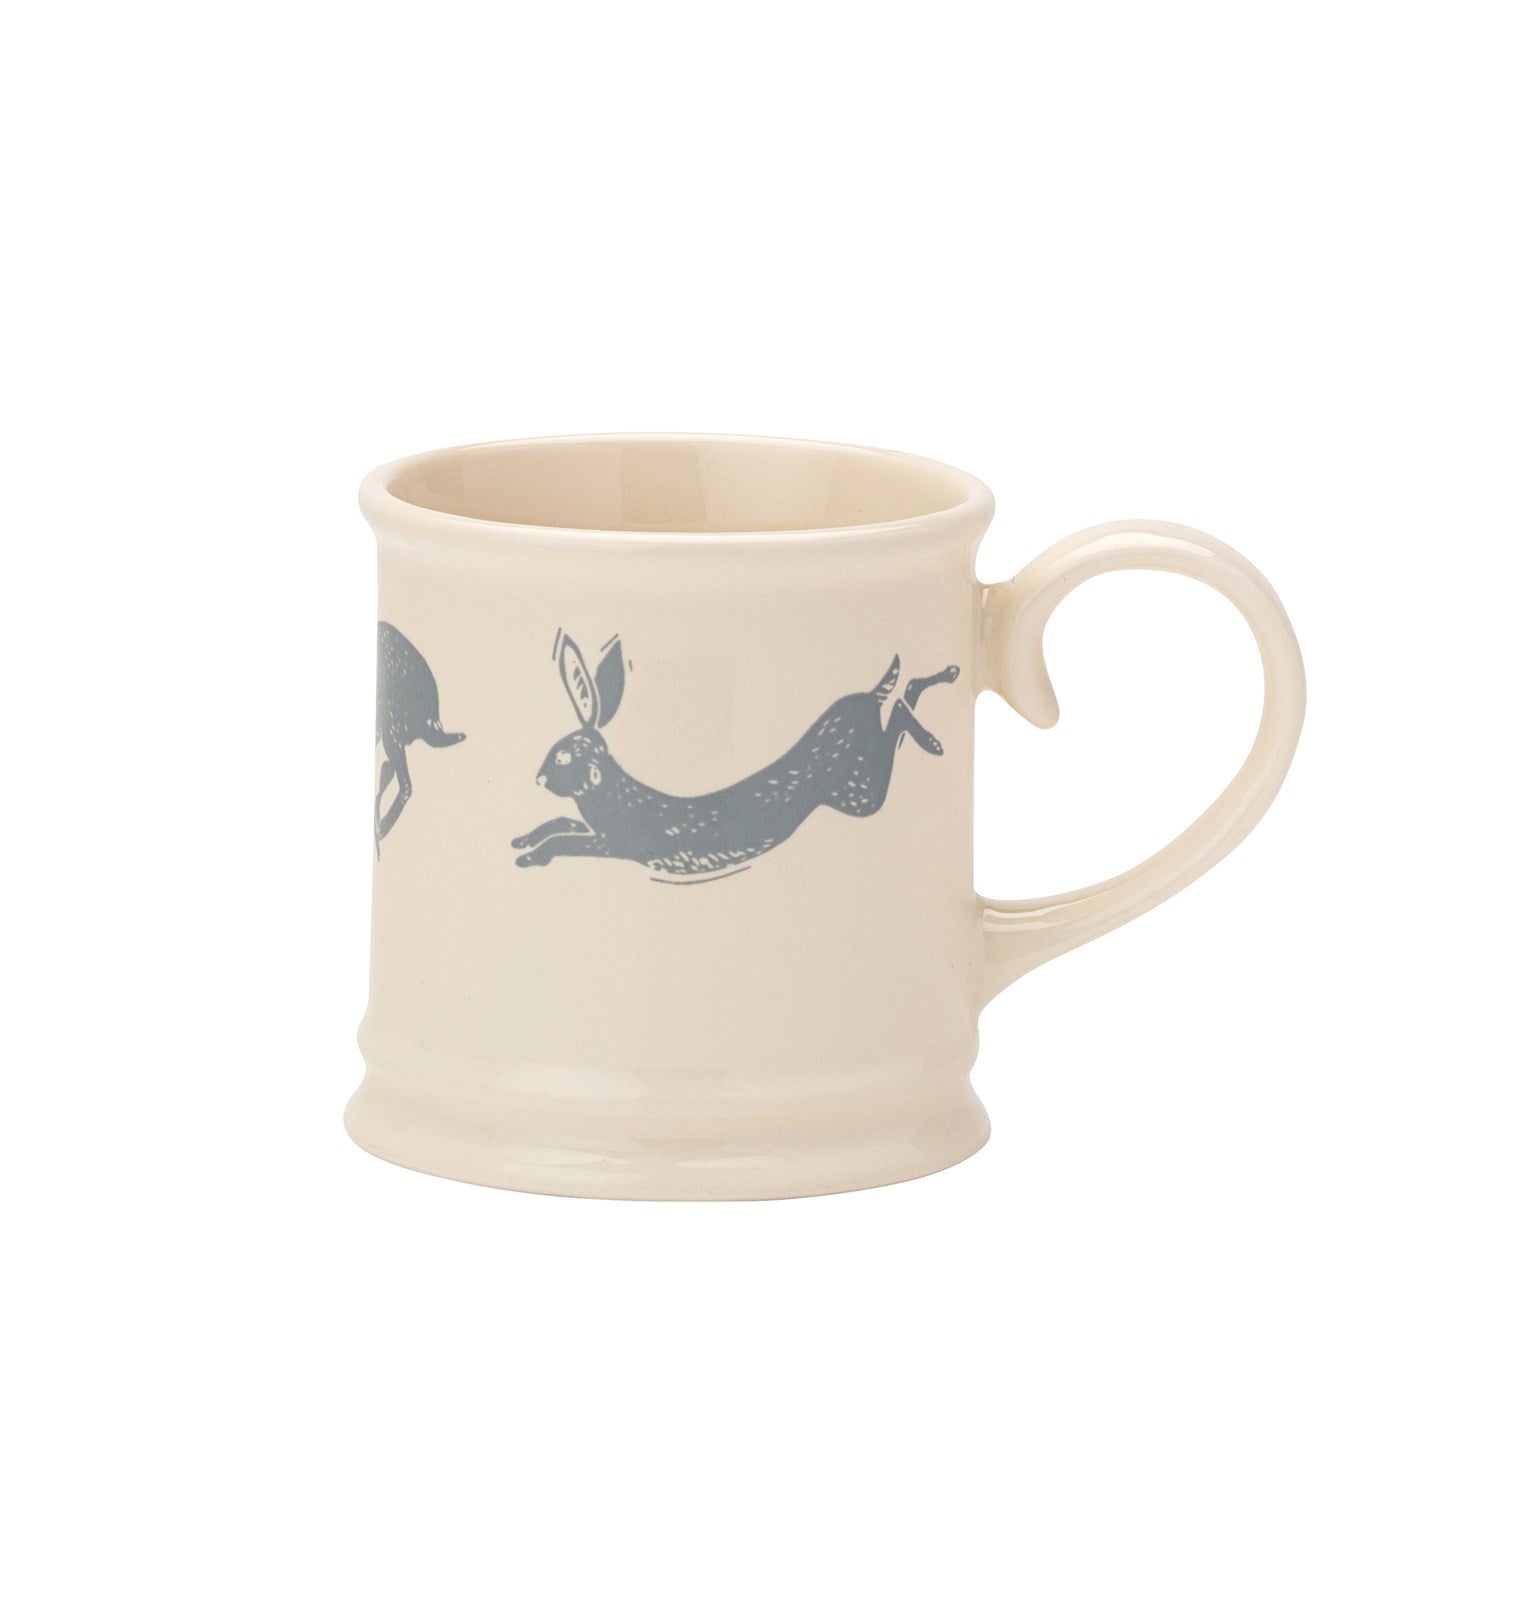 The English Tableware Company Artisan Small Hare Tankard Mug